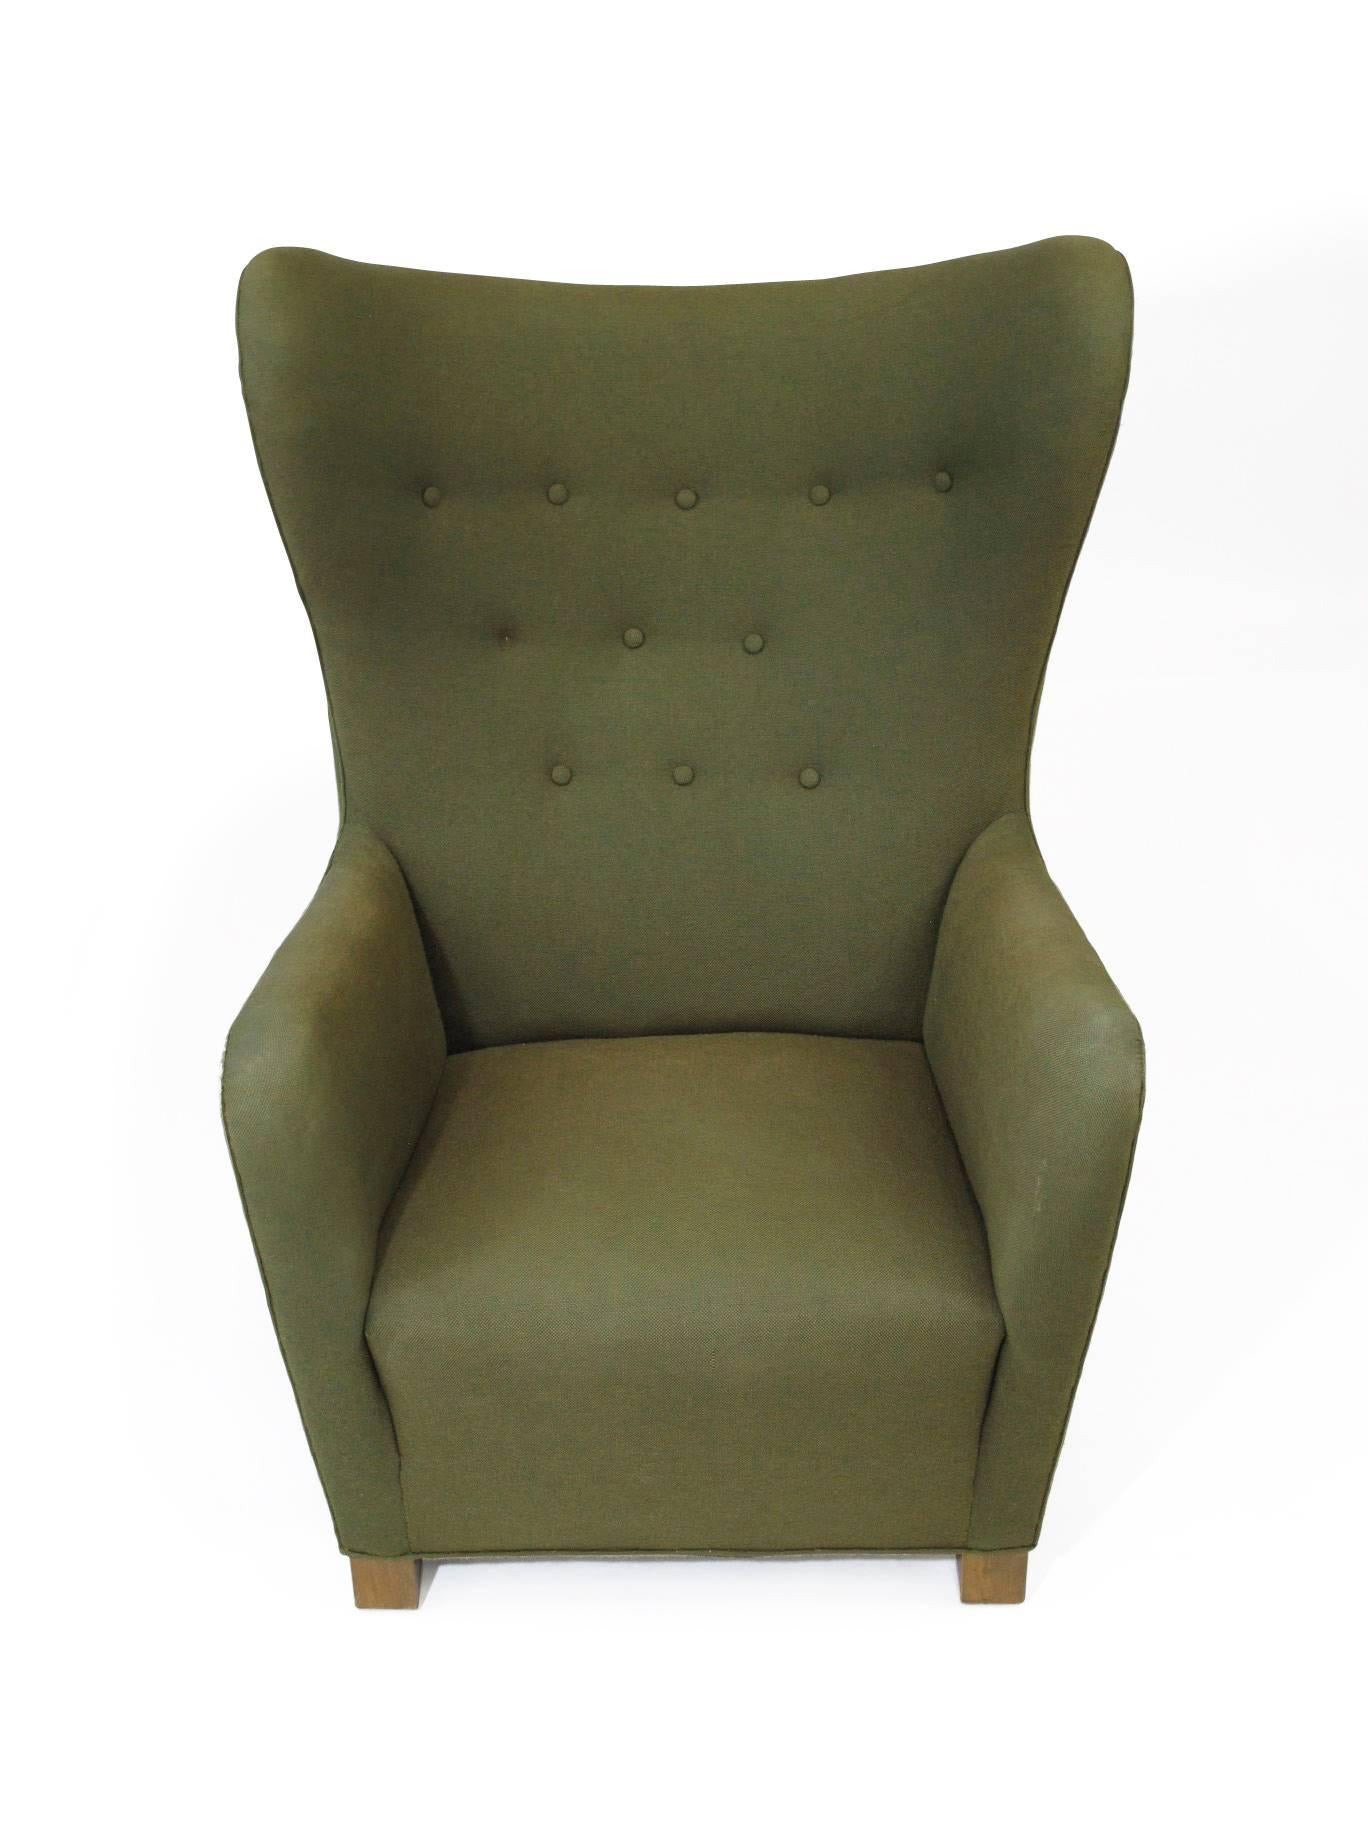 1942 Fritz Hansen Model 1672 Wing Back Chair in the Original Green Wool Fabric 2